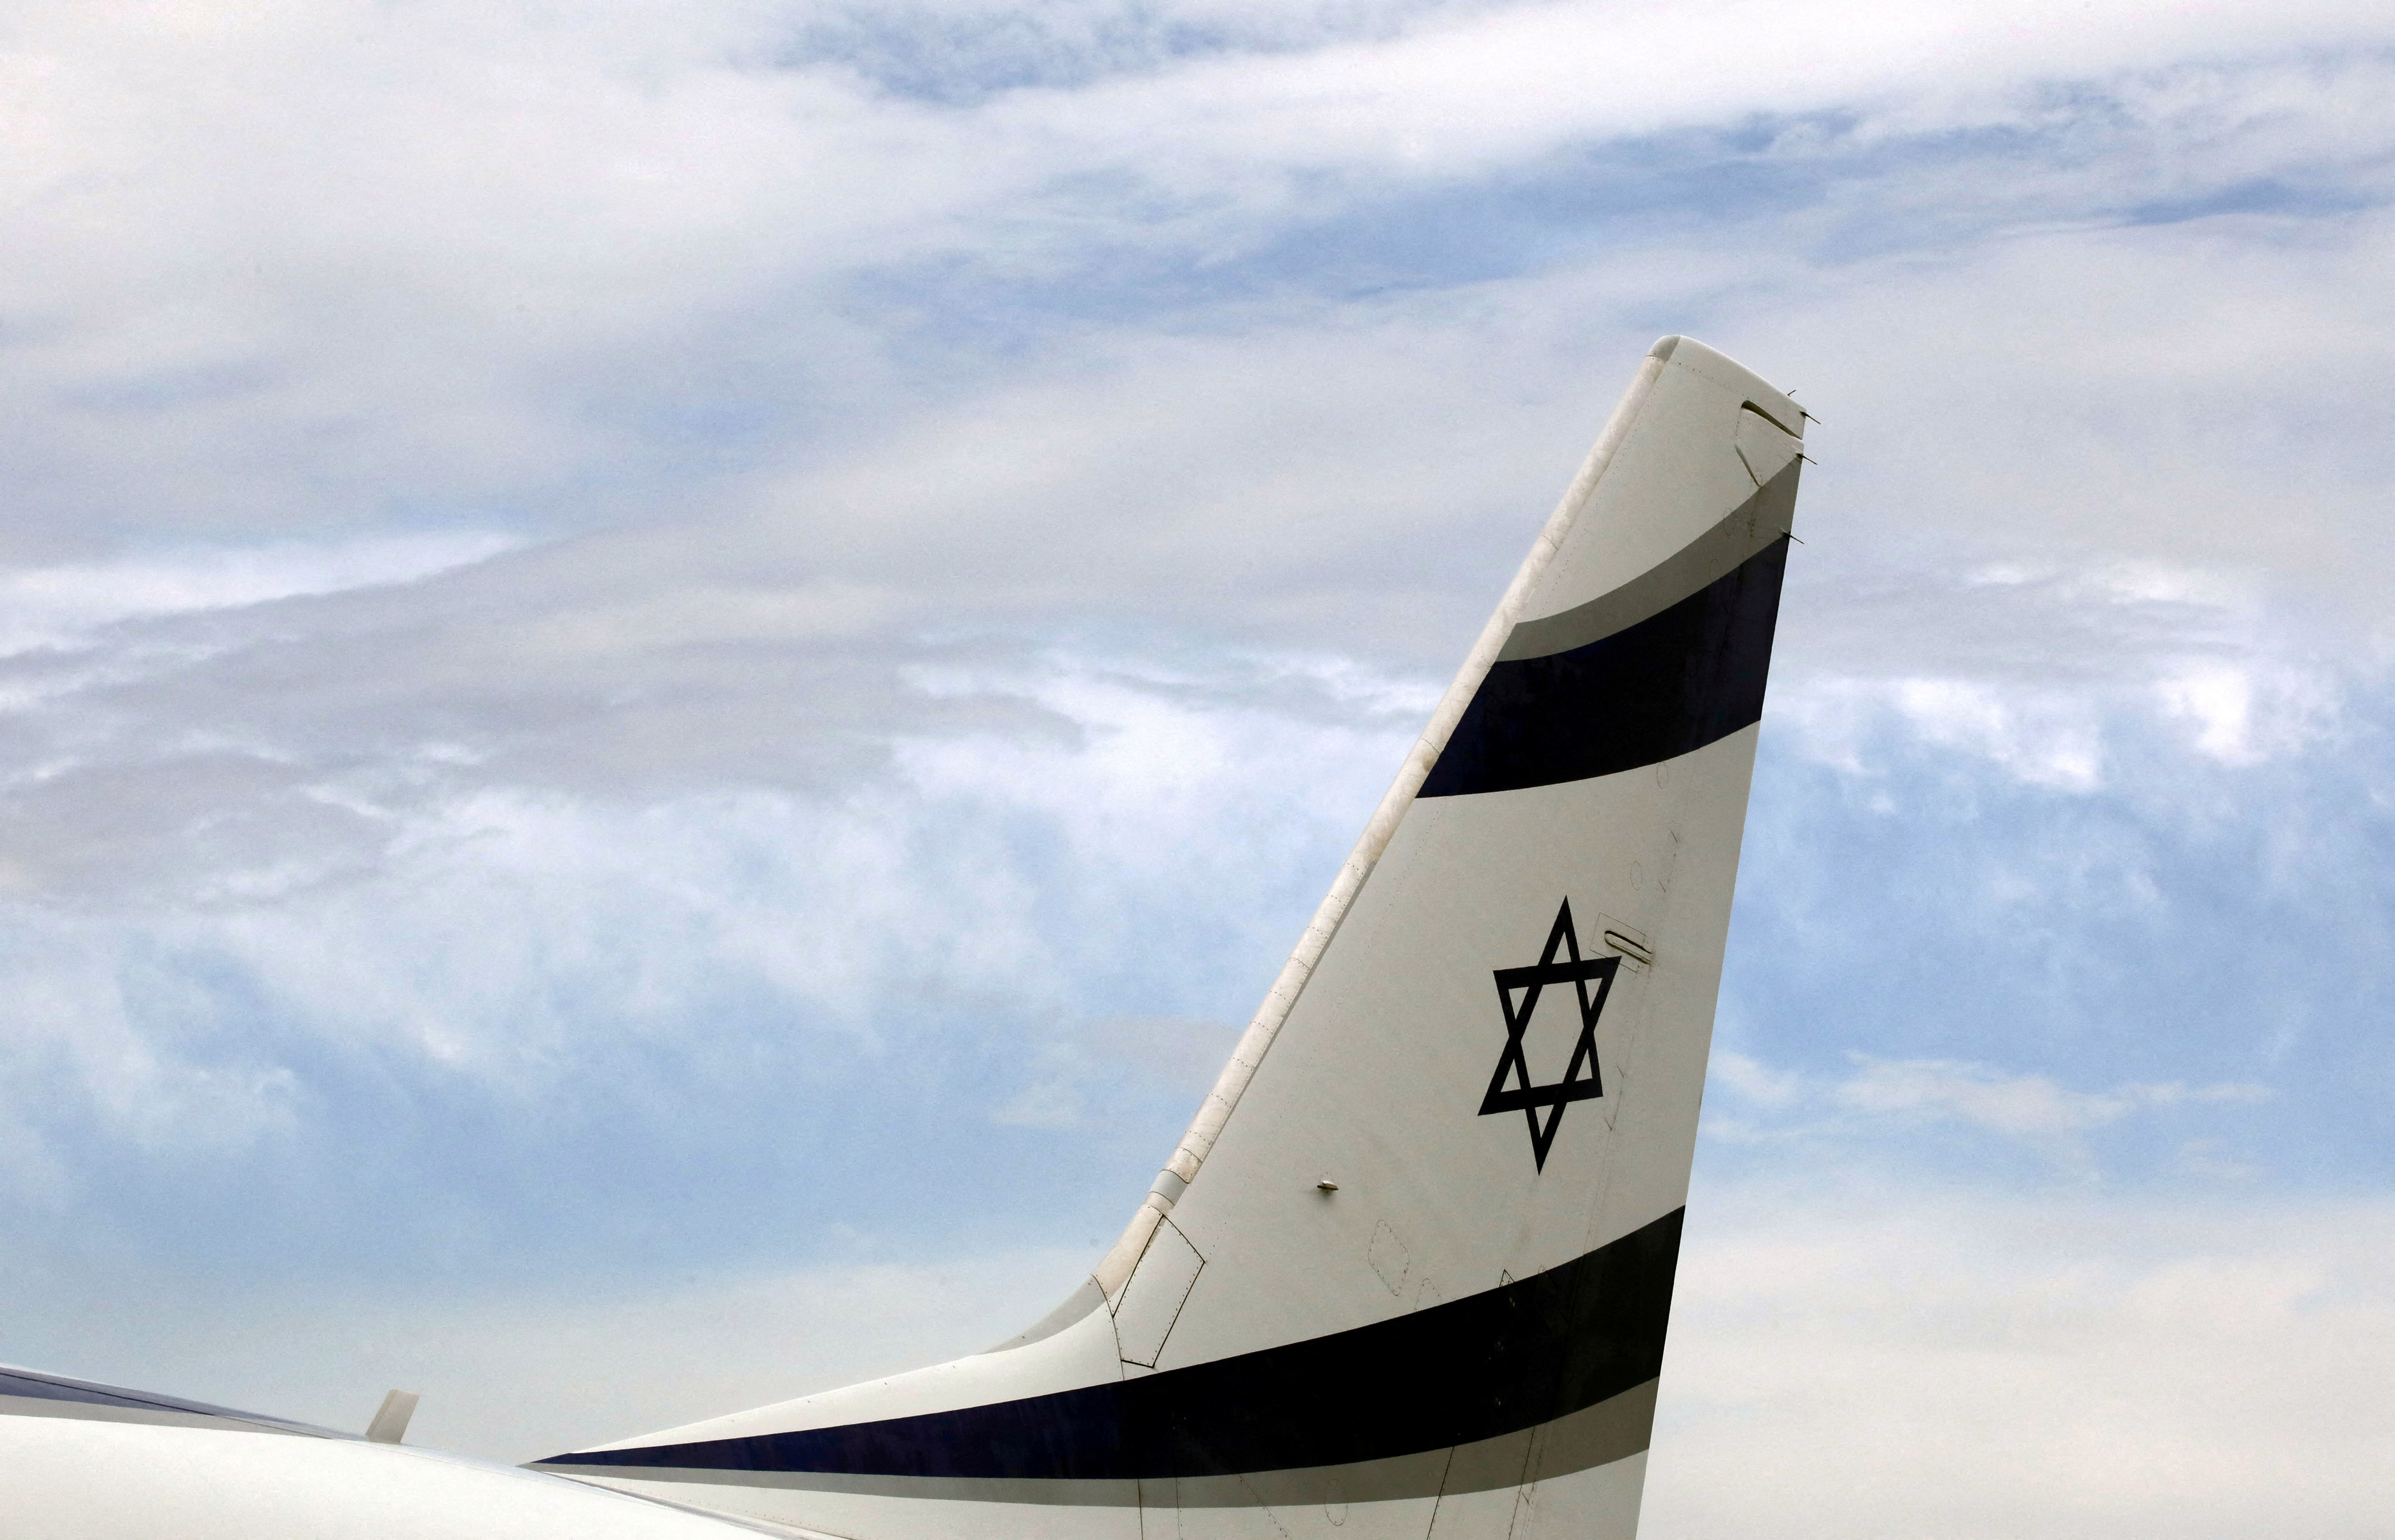 An Israel El Al airlines plane is seen after its landing following its inaugural flight between Tel Aviv and Nice at Nice international airport